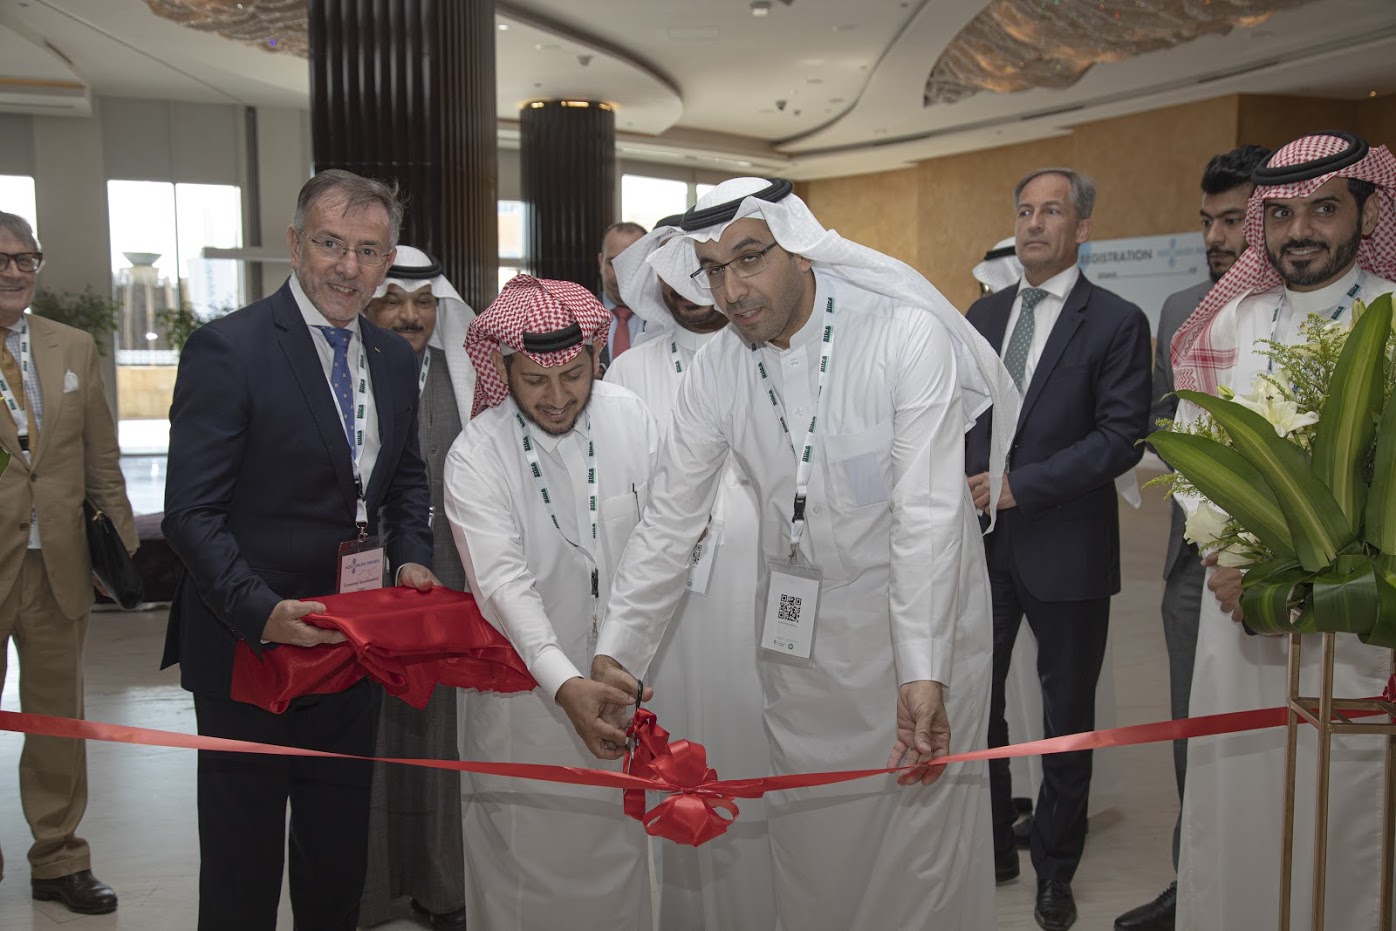 HE Khalid Al Qureshi and HE Abdullah Abdulkarim with Dr.C.Sommariva at the H2OSaudi Arabia conference ribbon cutting